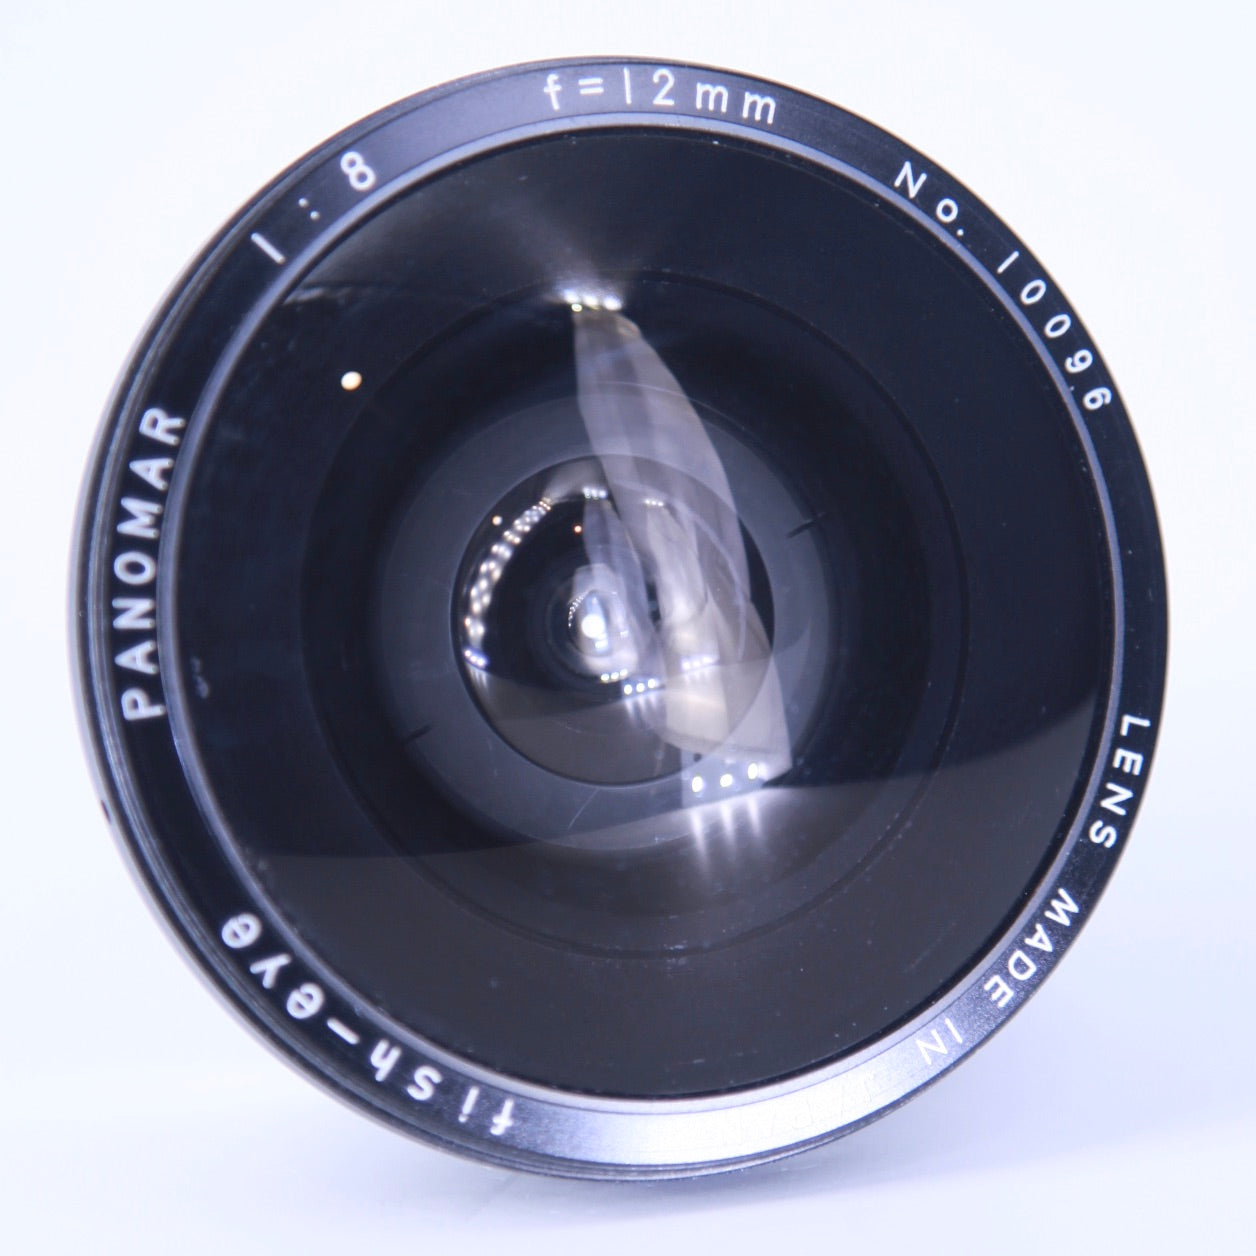 Panomar 12mm f8 fish-eye M42